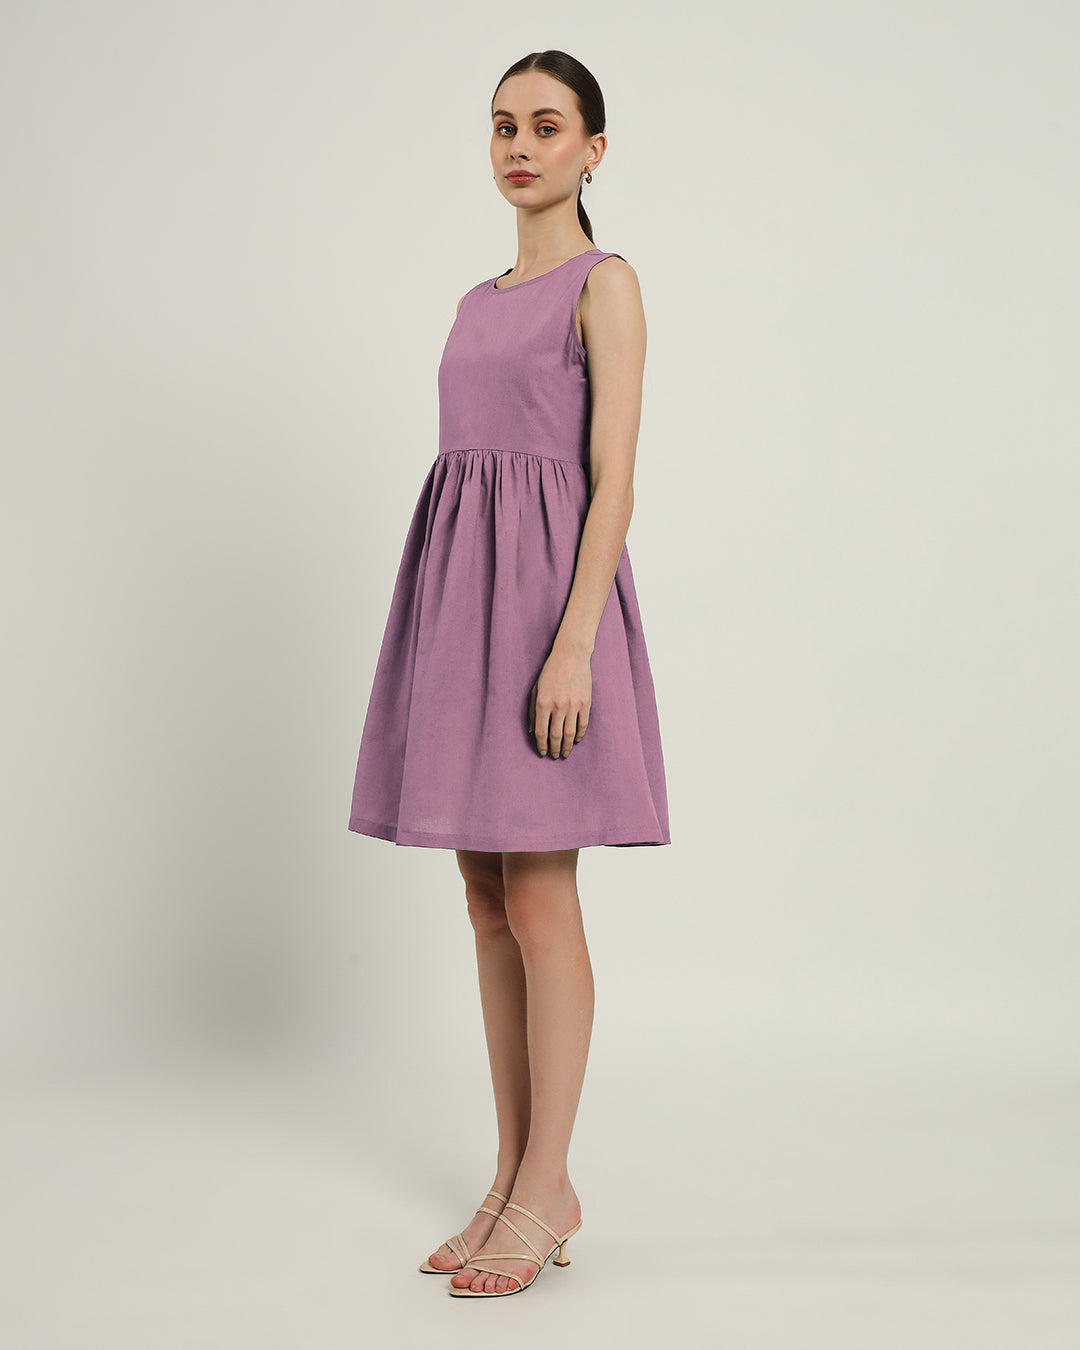 The Chania Purple Swirl Dress